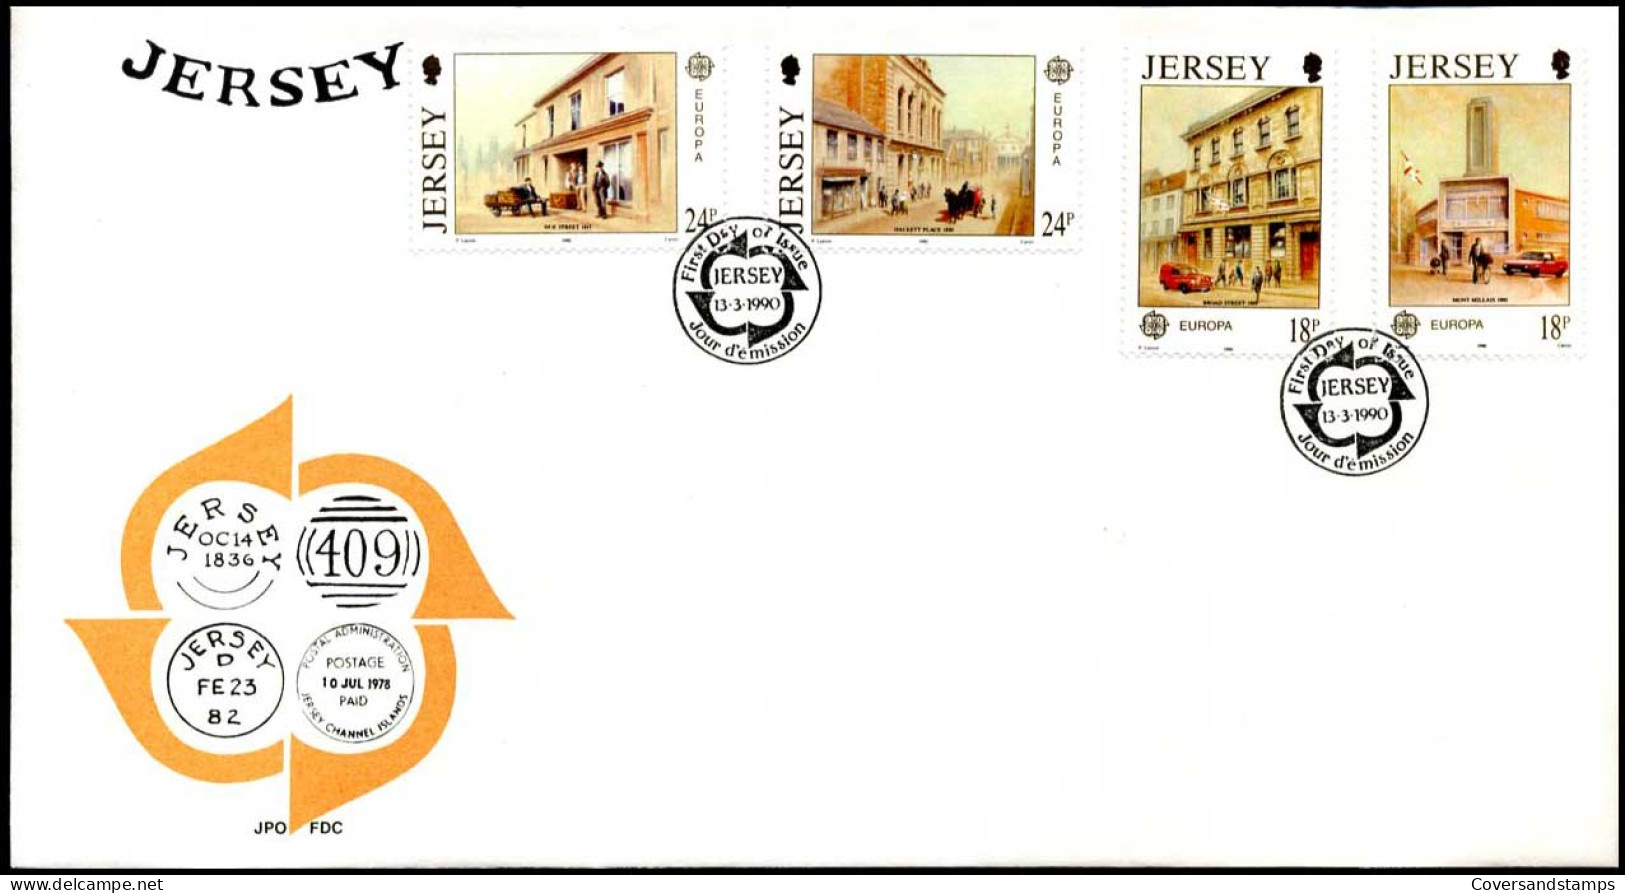  Jersey - FDC - Europa CEPT 1990 - 1990